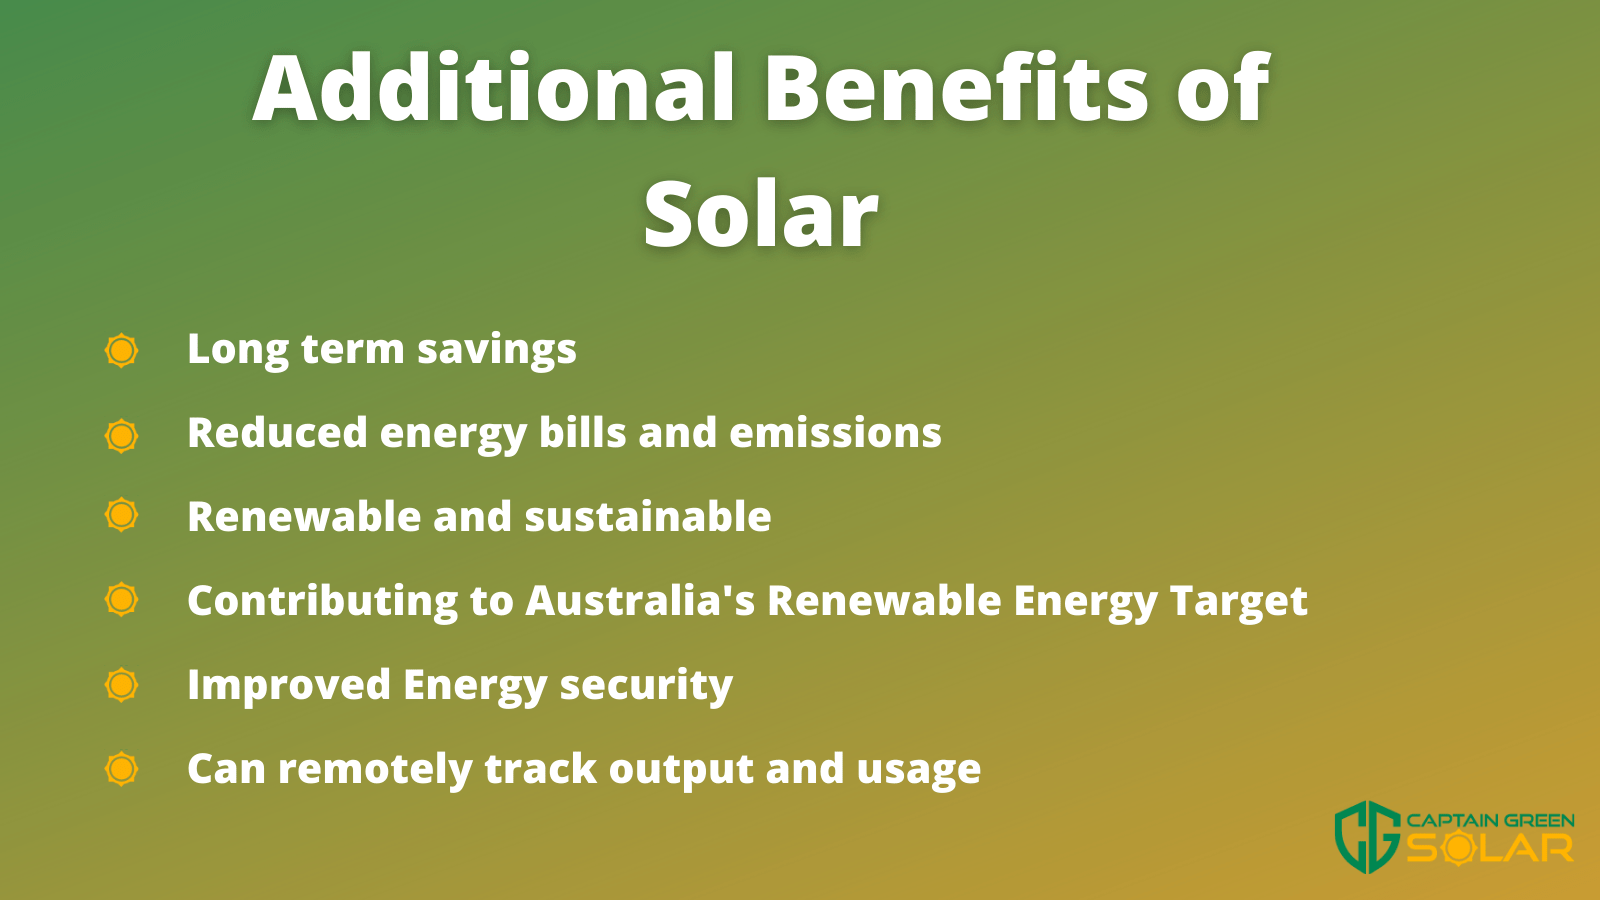 Solar panel benefits infographic